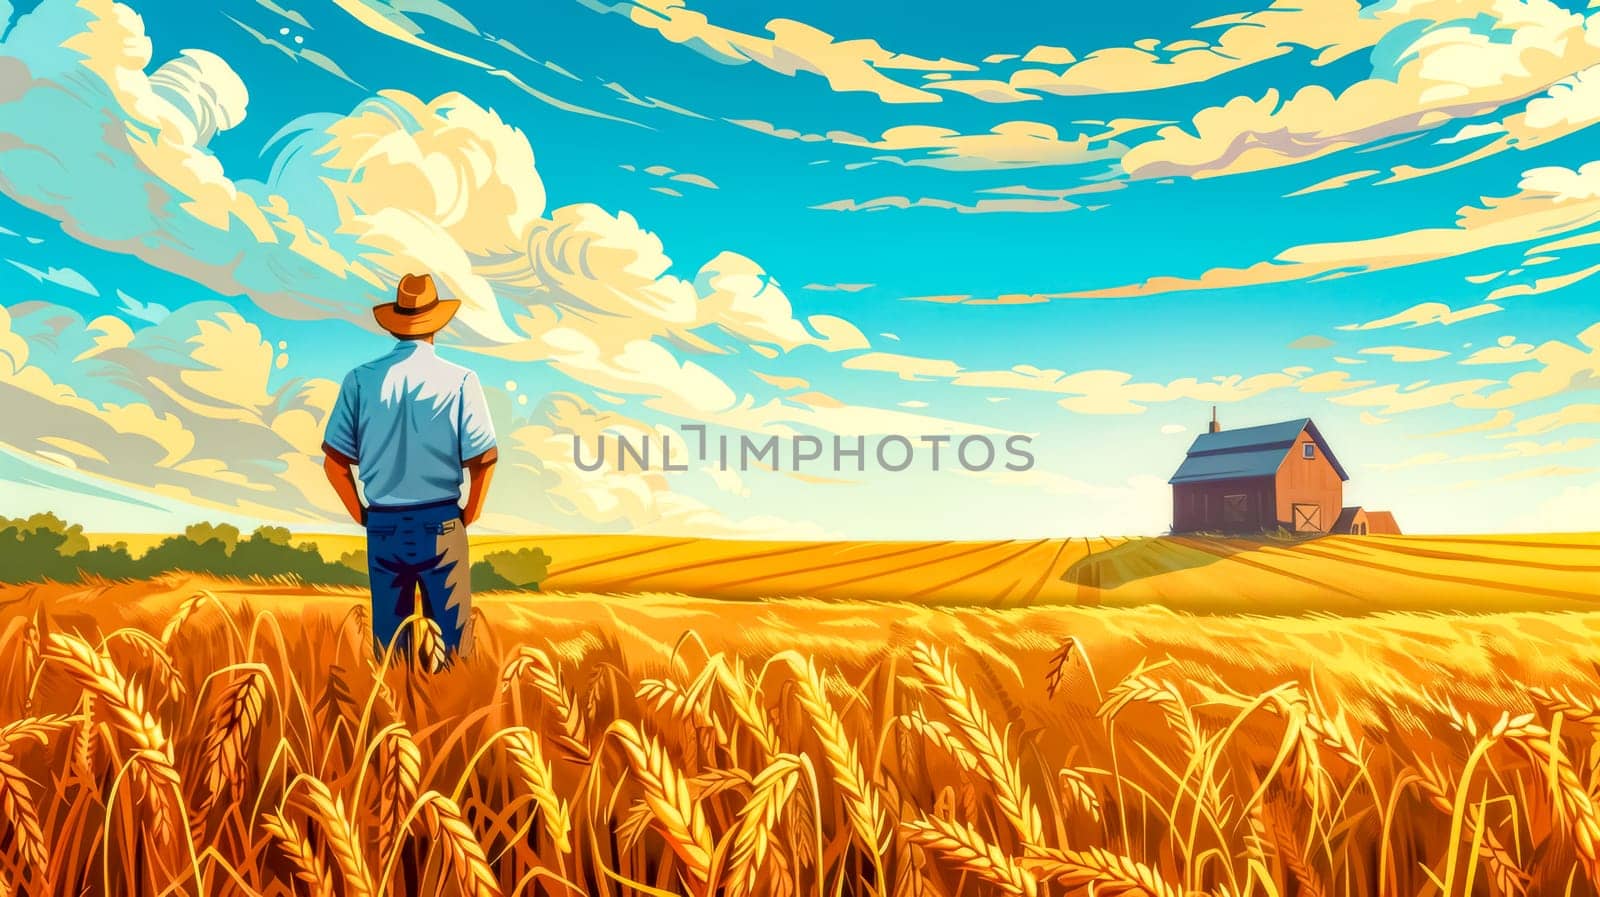 Serene illustration of a farmer gazing at a ripe wheat field under a vibrant sky